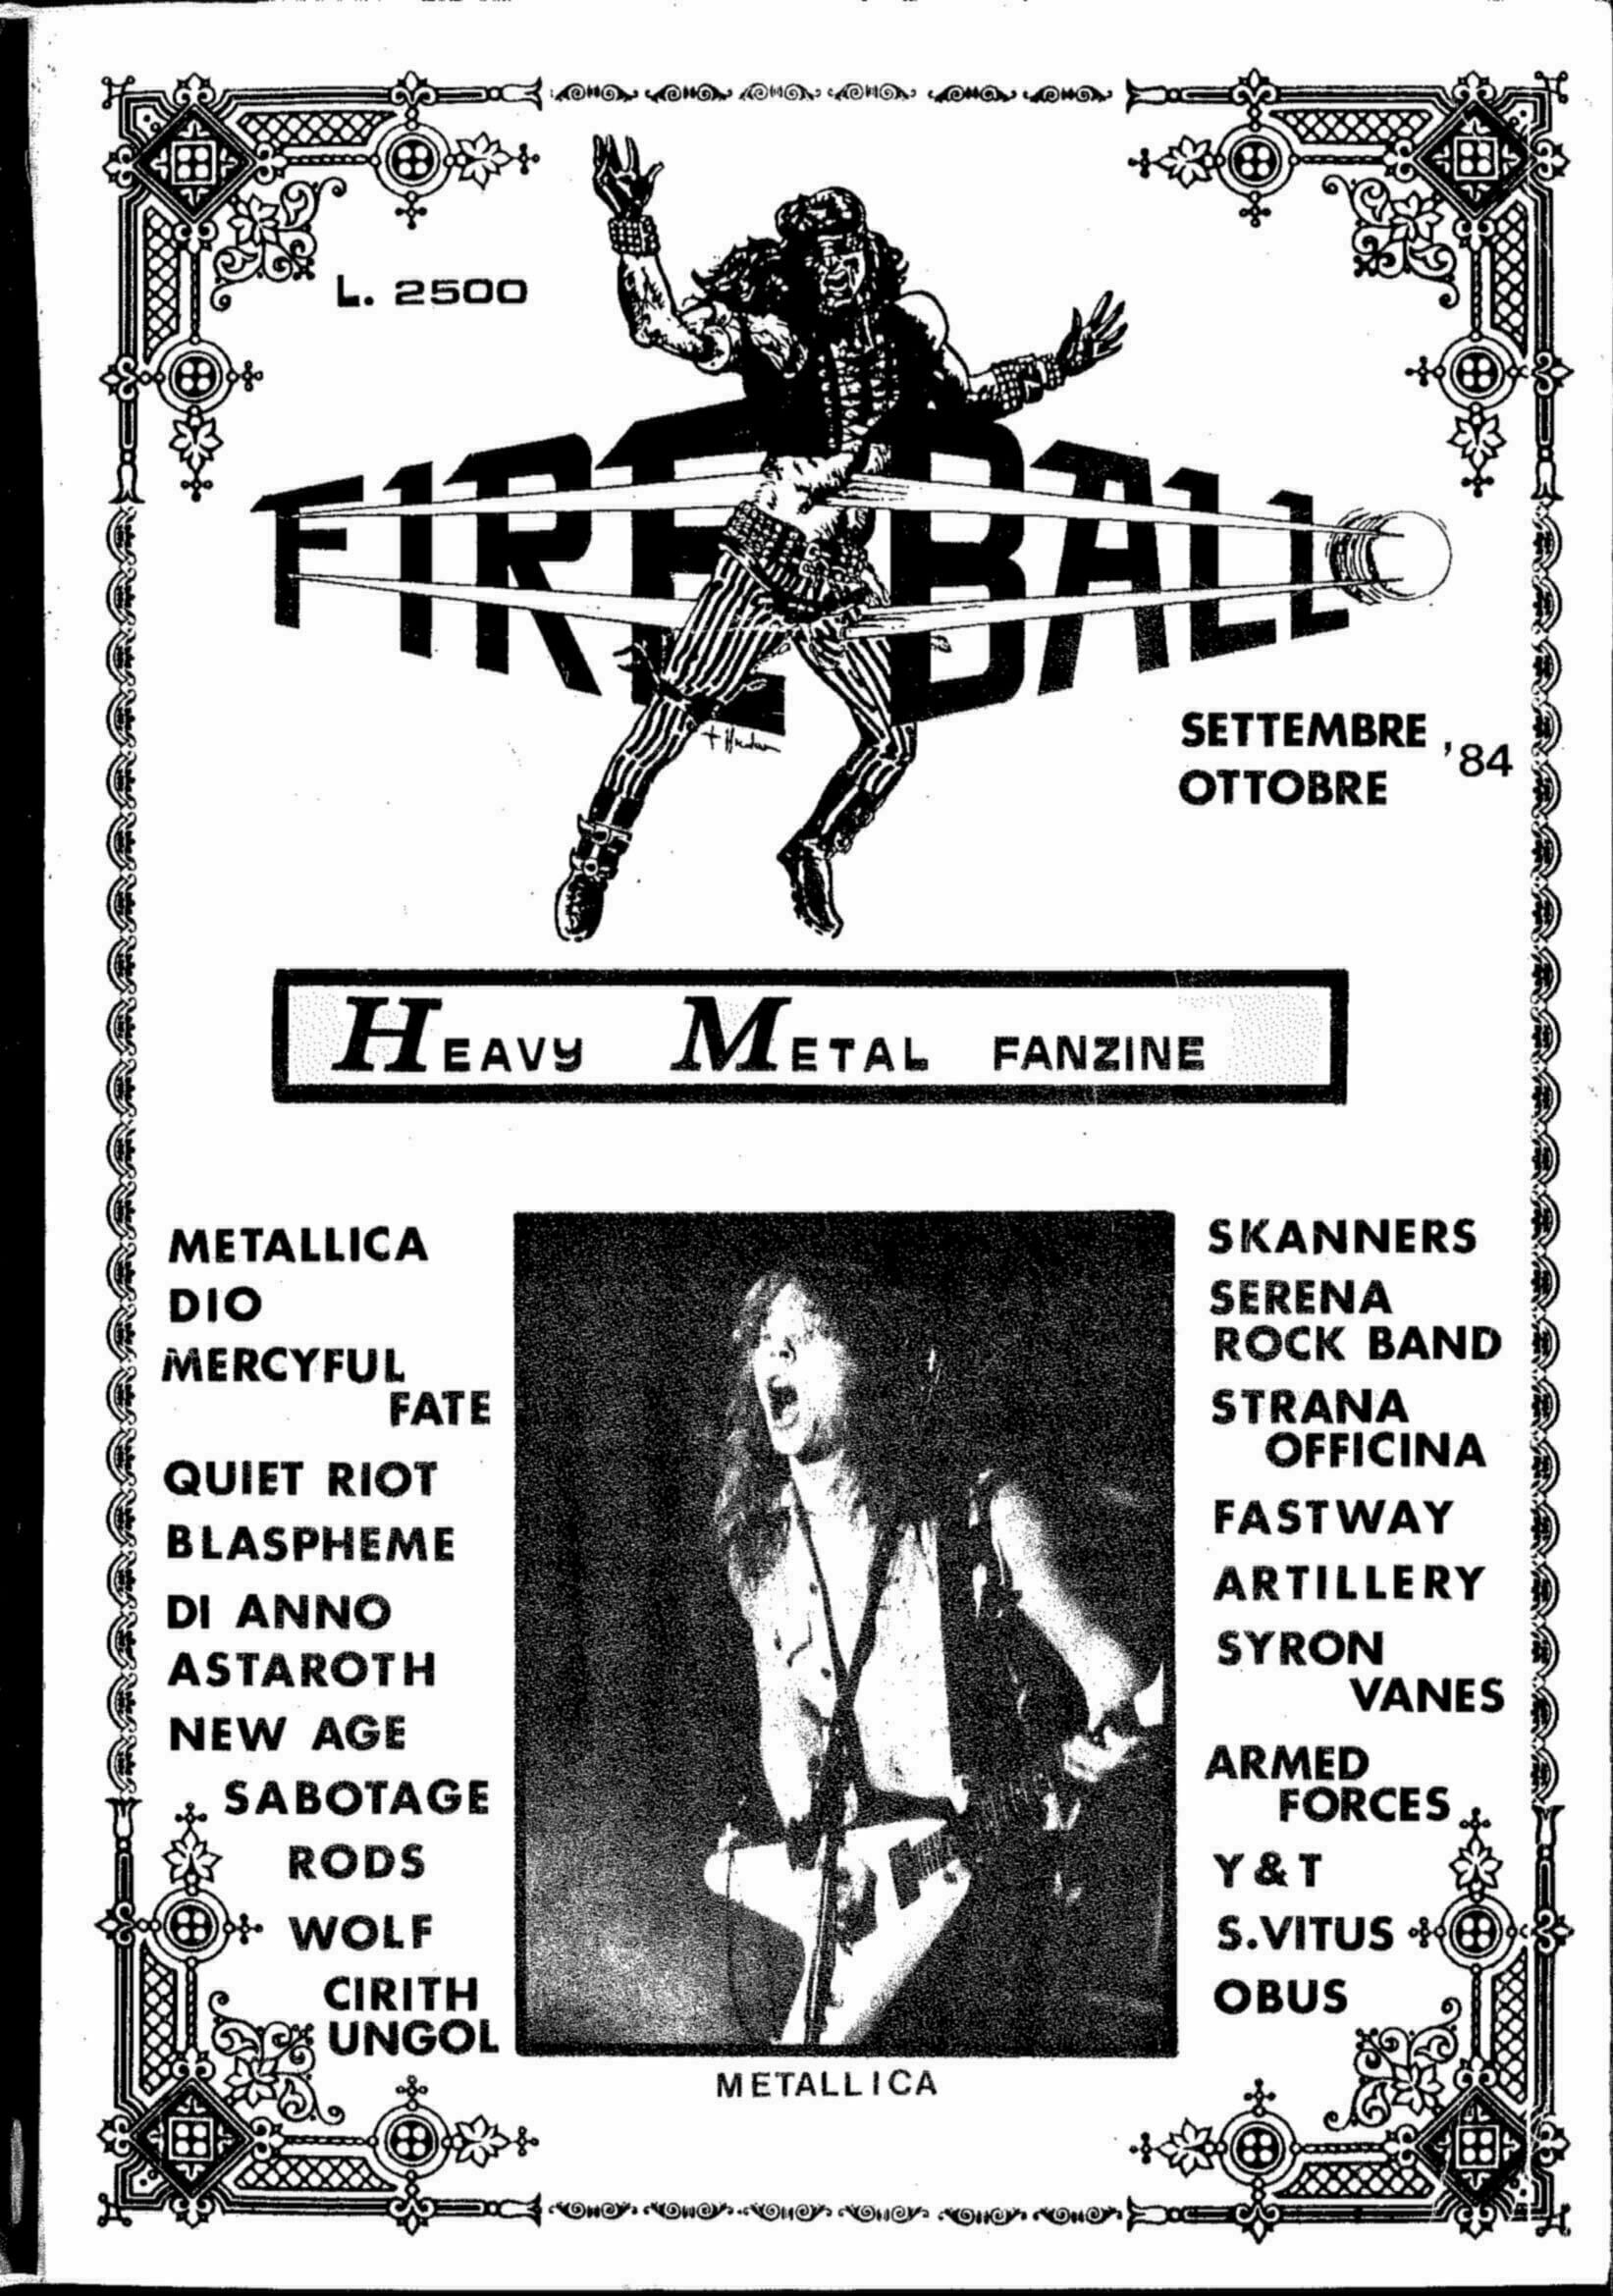 fireball-8410-01 Fireball - Settembre/Ottobre '84  